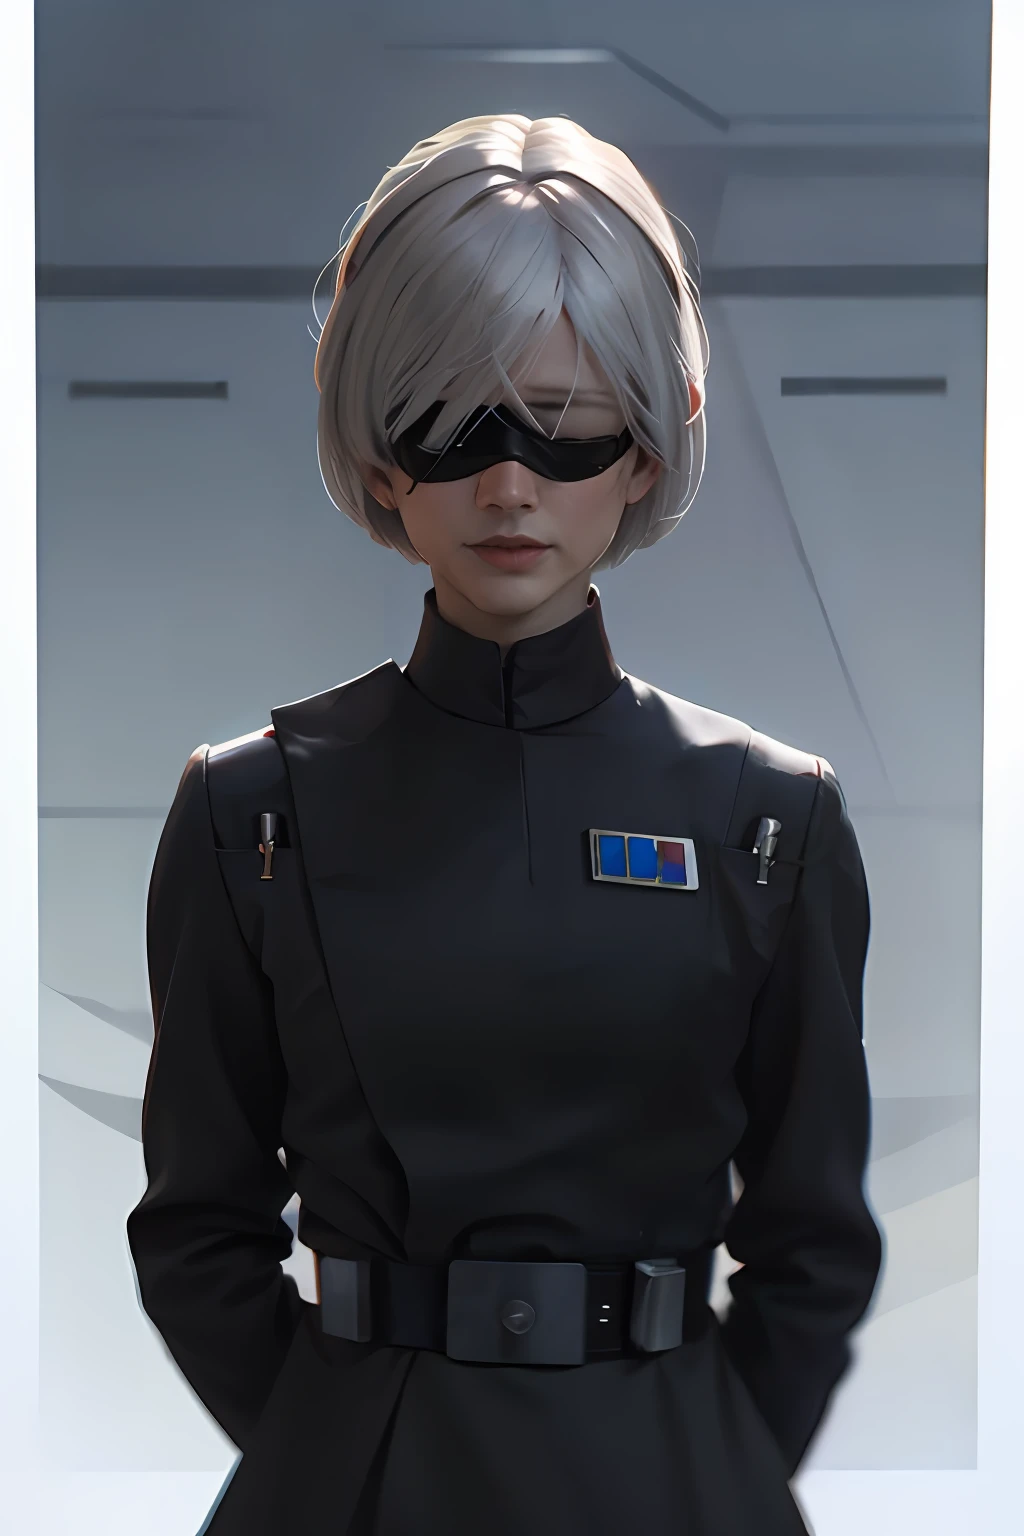 n_2b
blindfold, black blindfold, white imperialofficer uniform